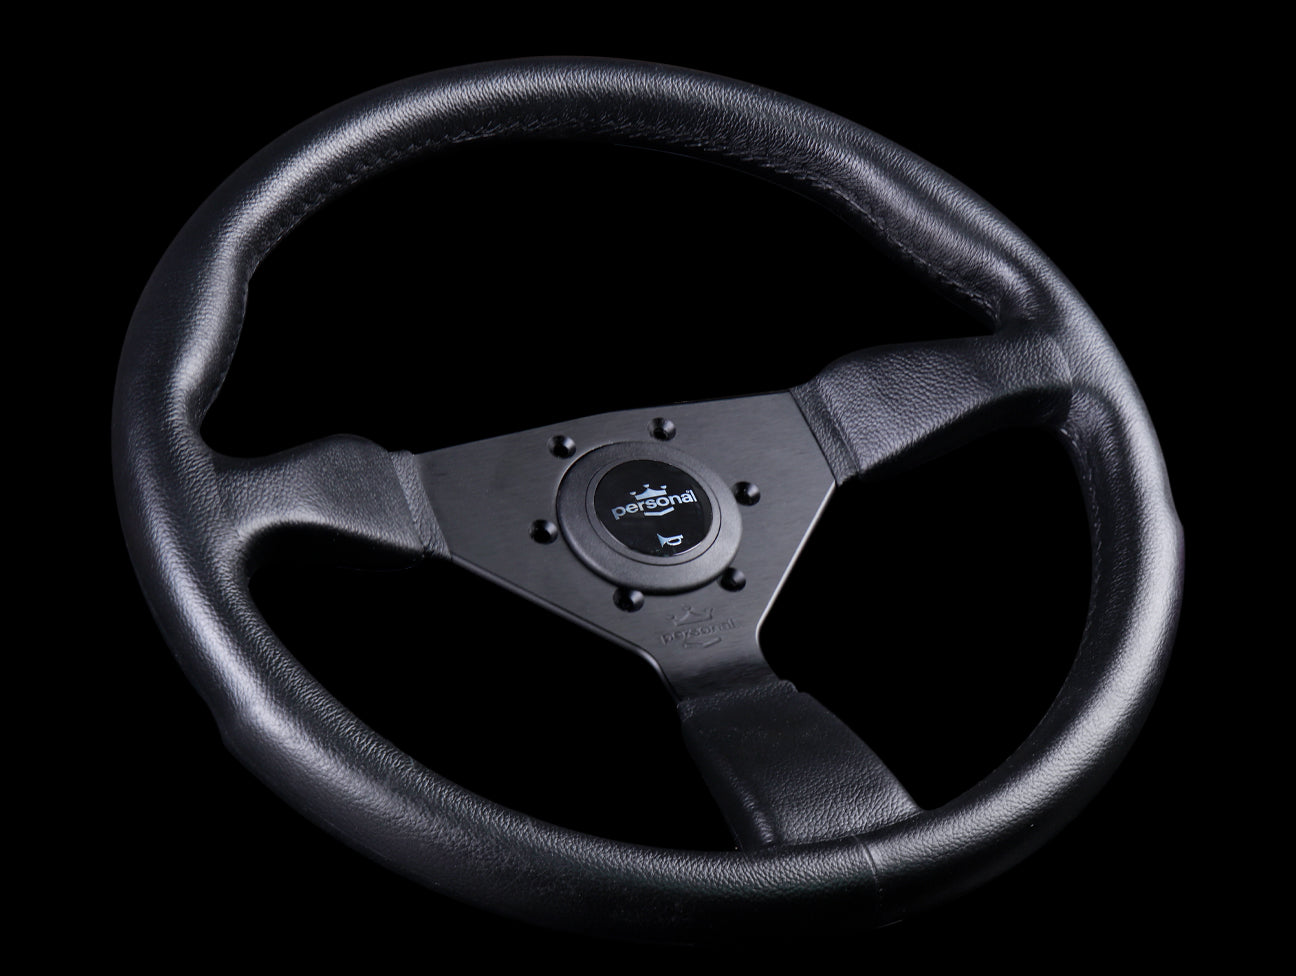 Personal Grinta 350mm Steering Wheel - Black Polyurethane /  Silver Horn Button